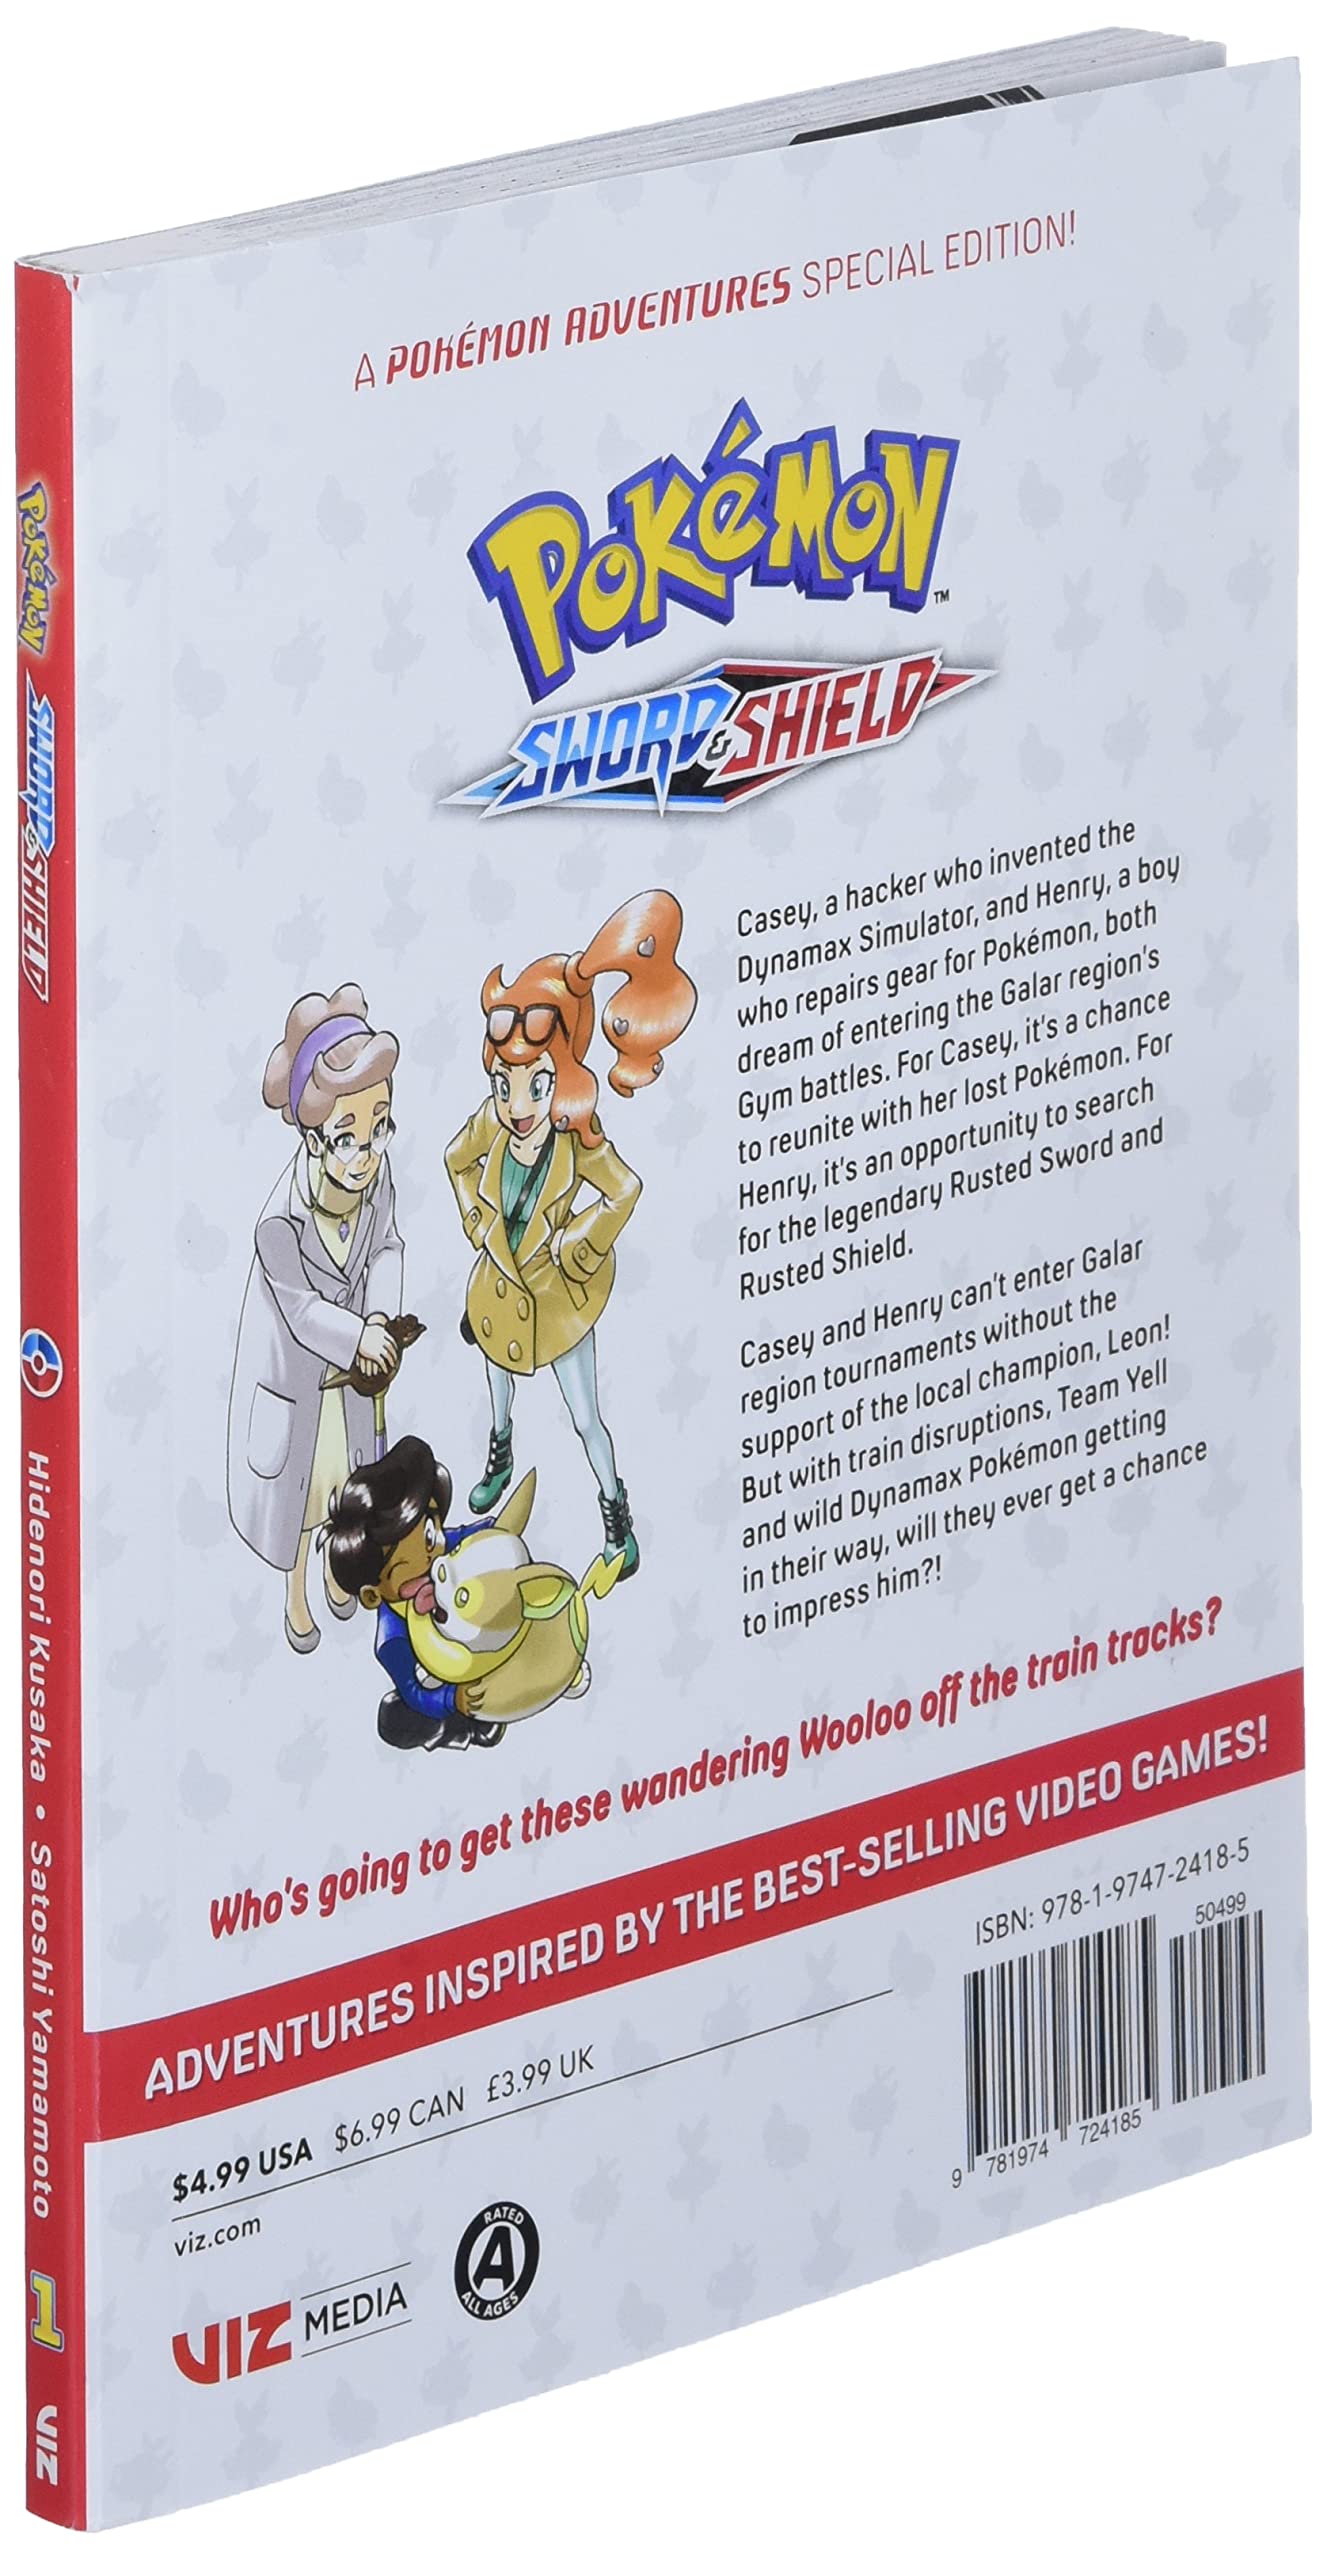 Pokémon: Sword & Shield, Vol. 1 (1)